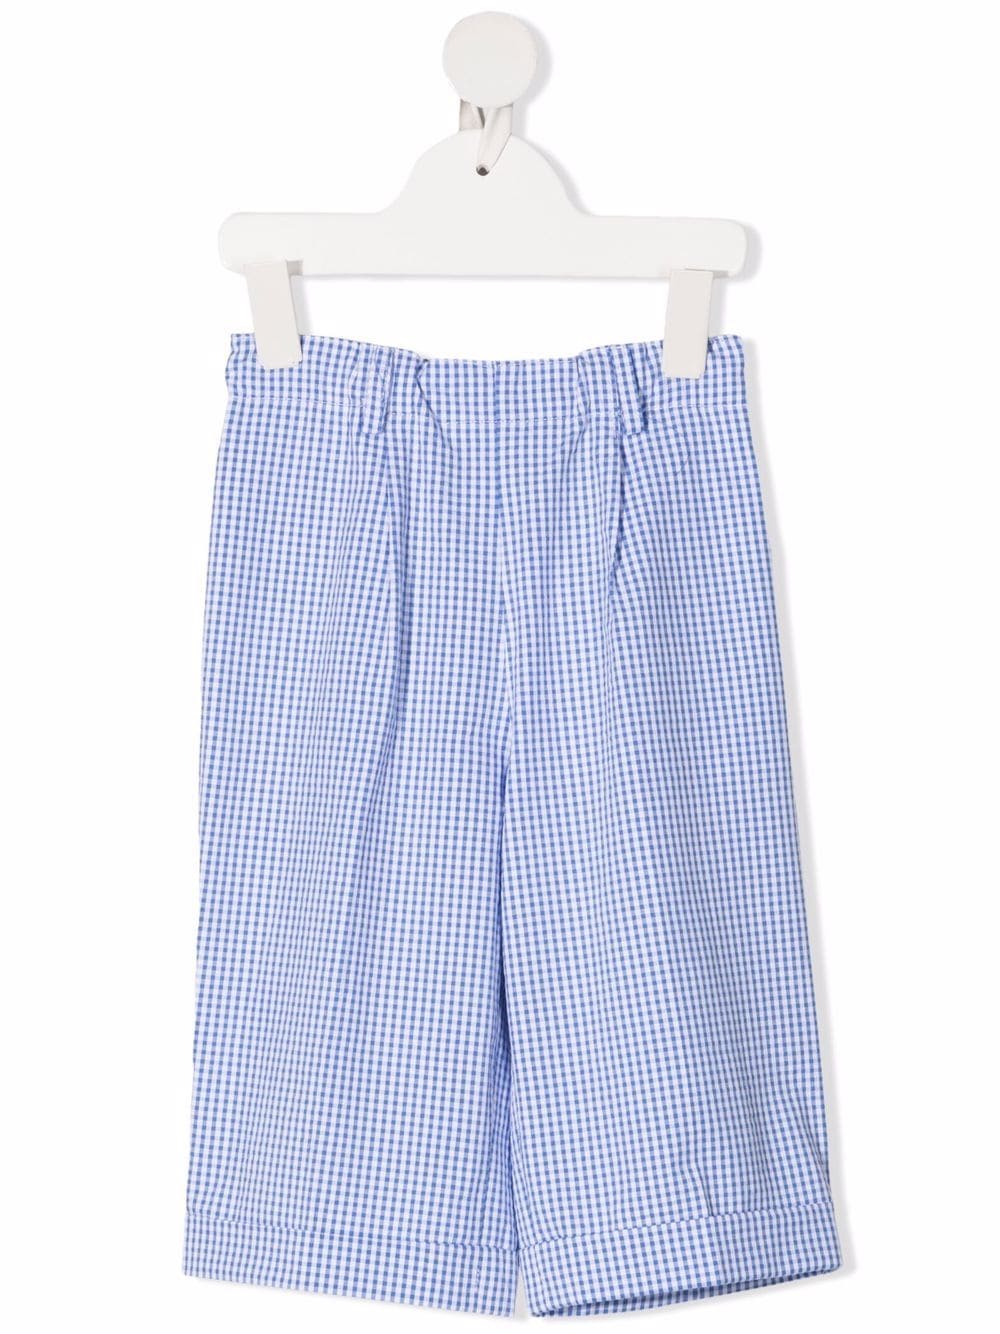 Siola gingham check tailored shorts - Blue von Siola